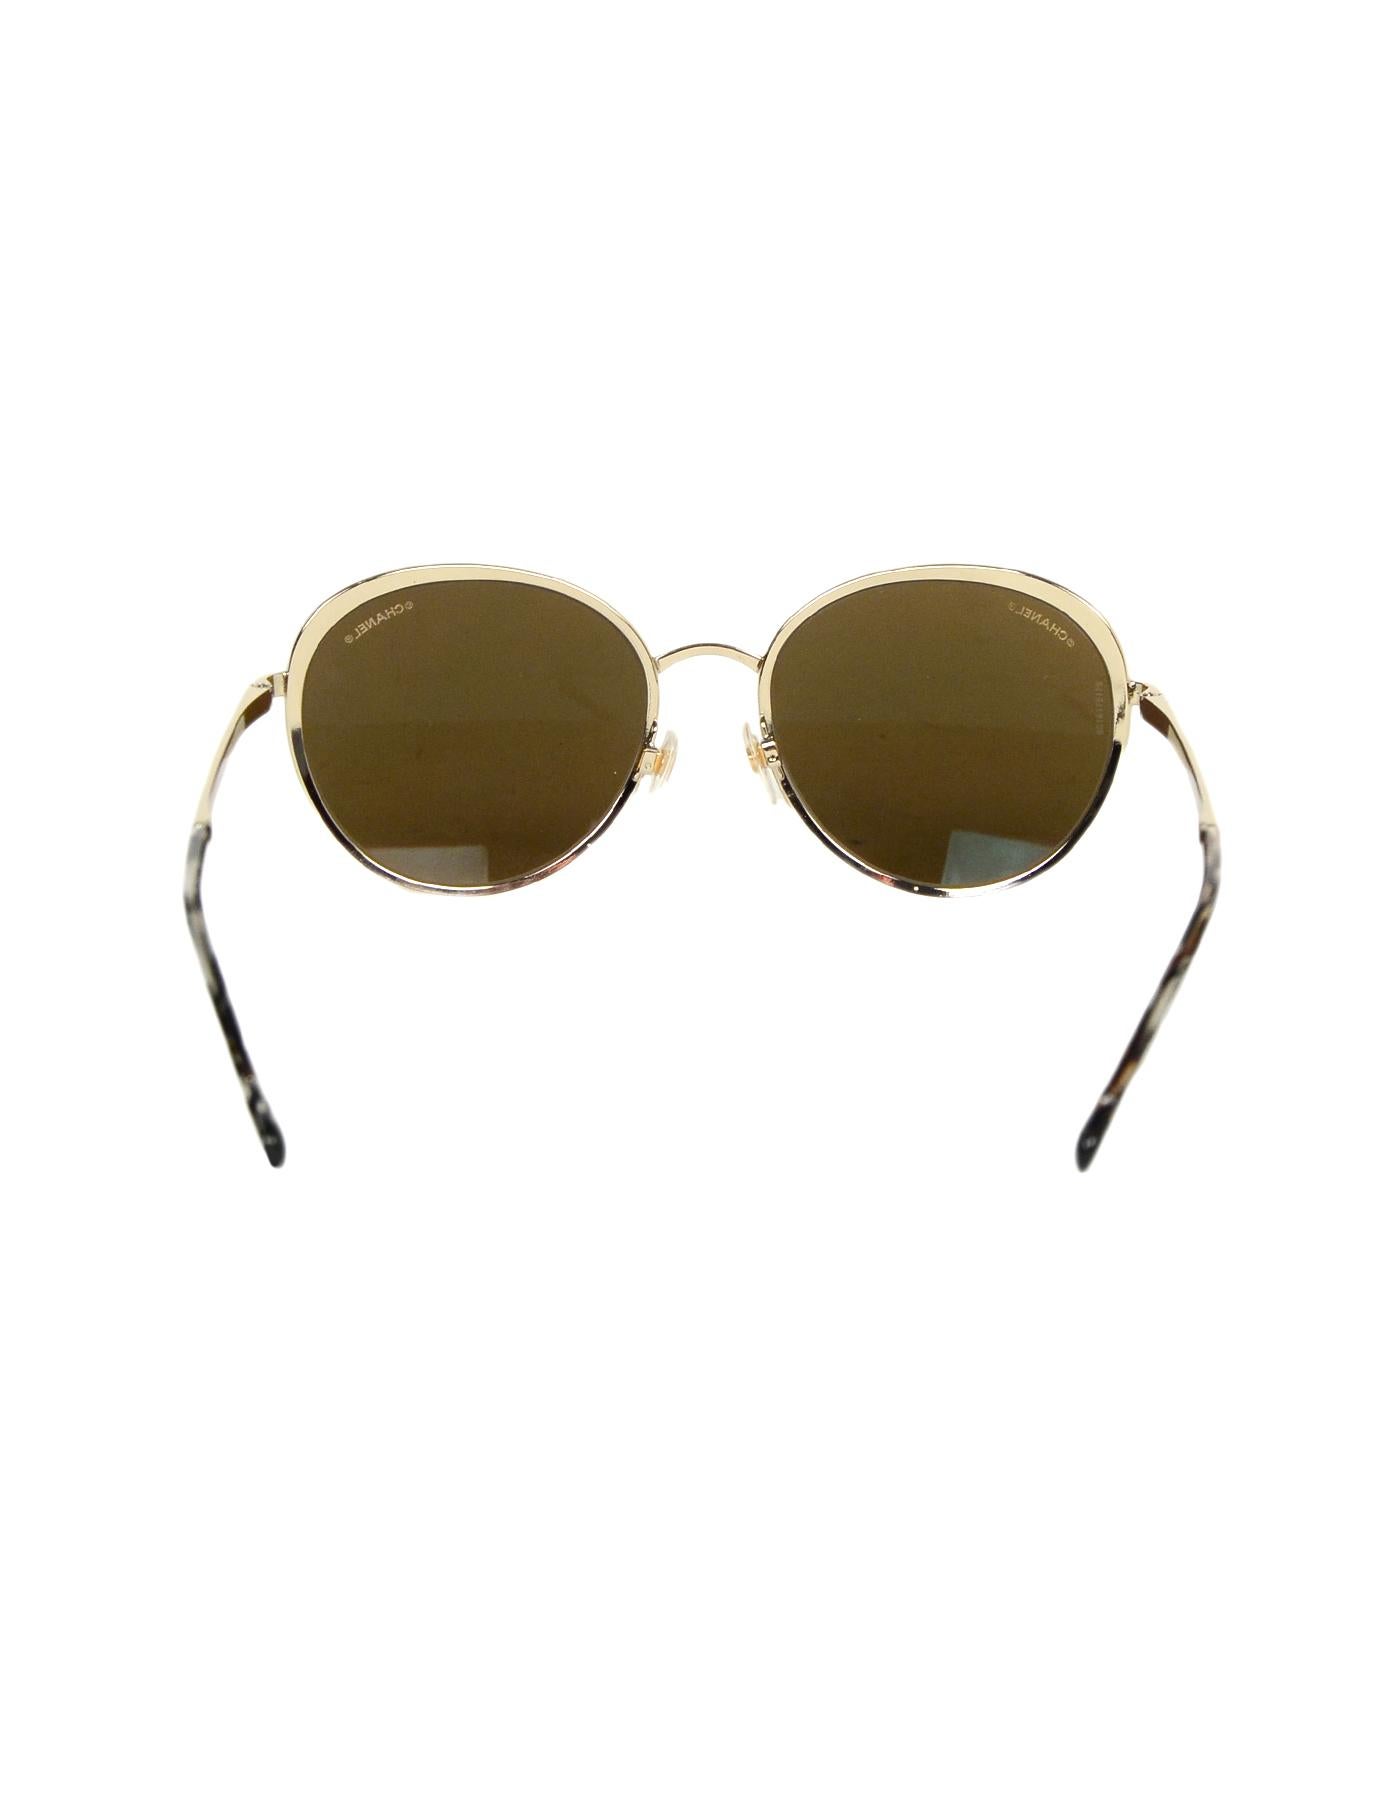 Women's Chanel 18K Gold Mirrored Lenses & Metal Rounded Sunglasses W/ Case rt. $530